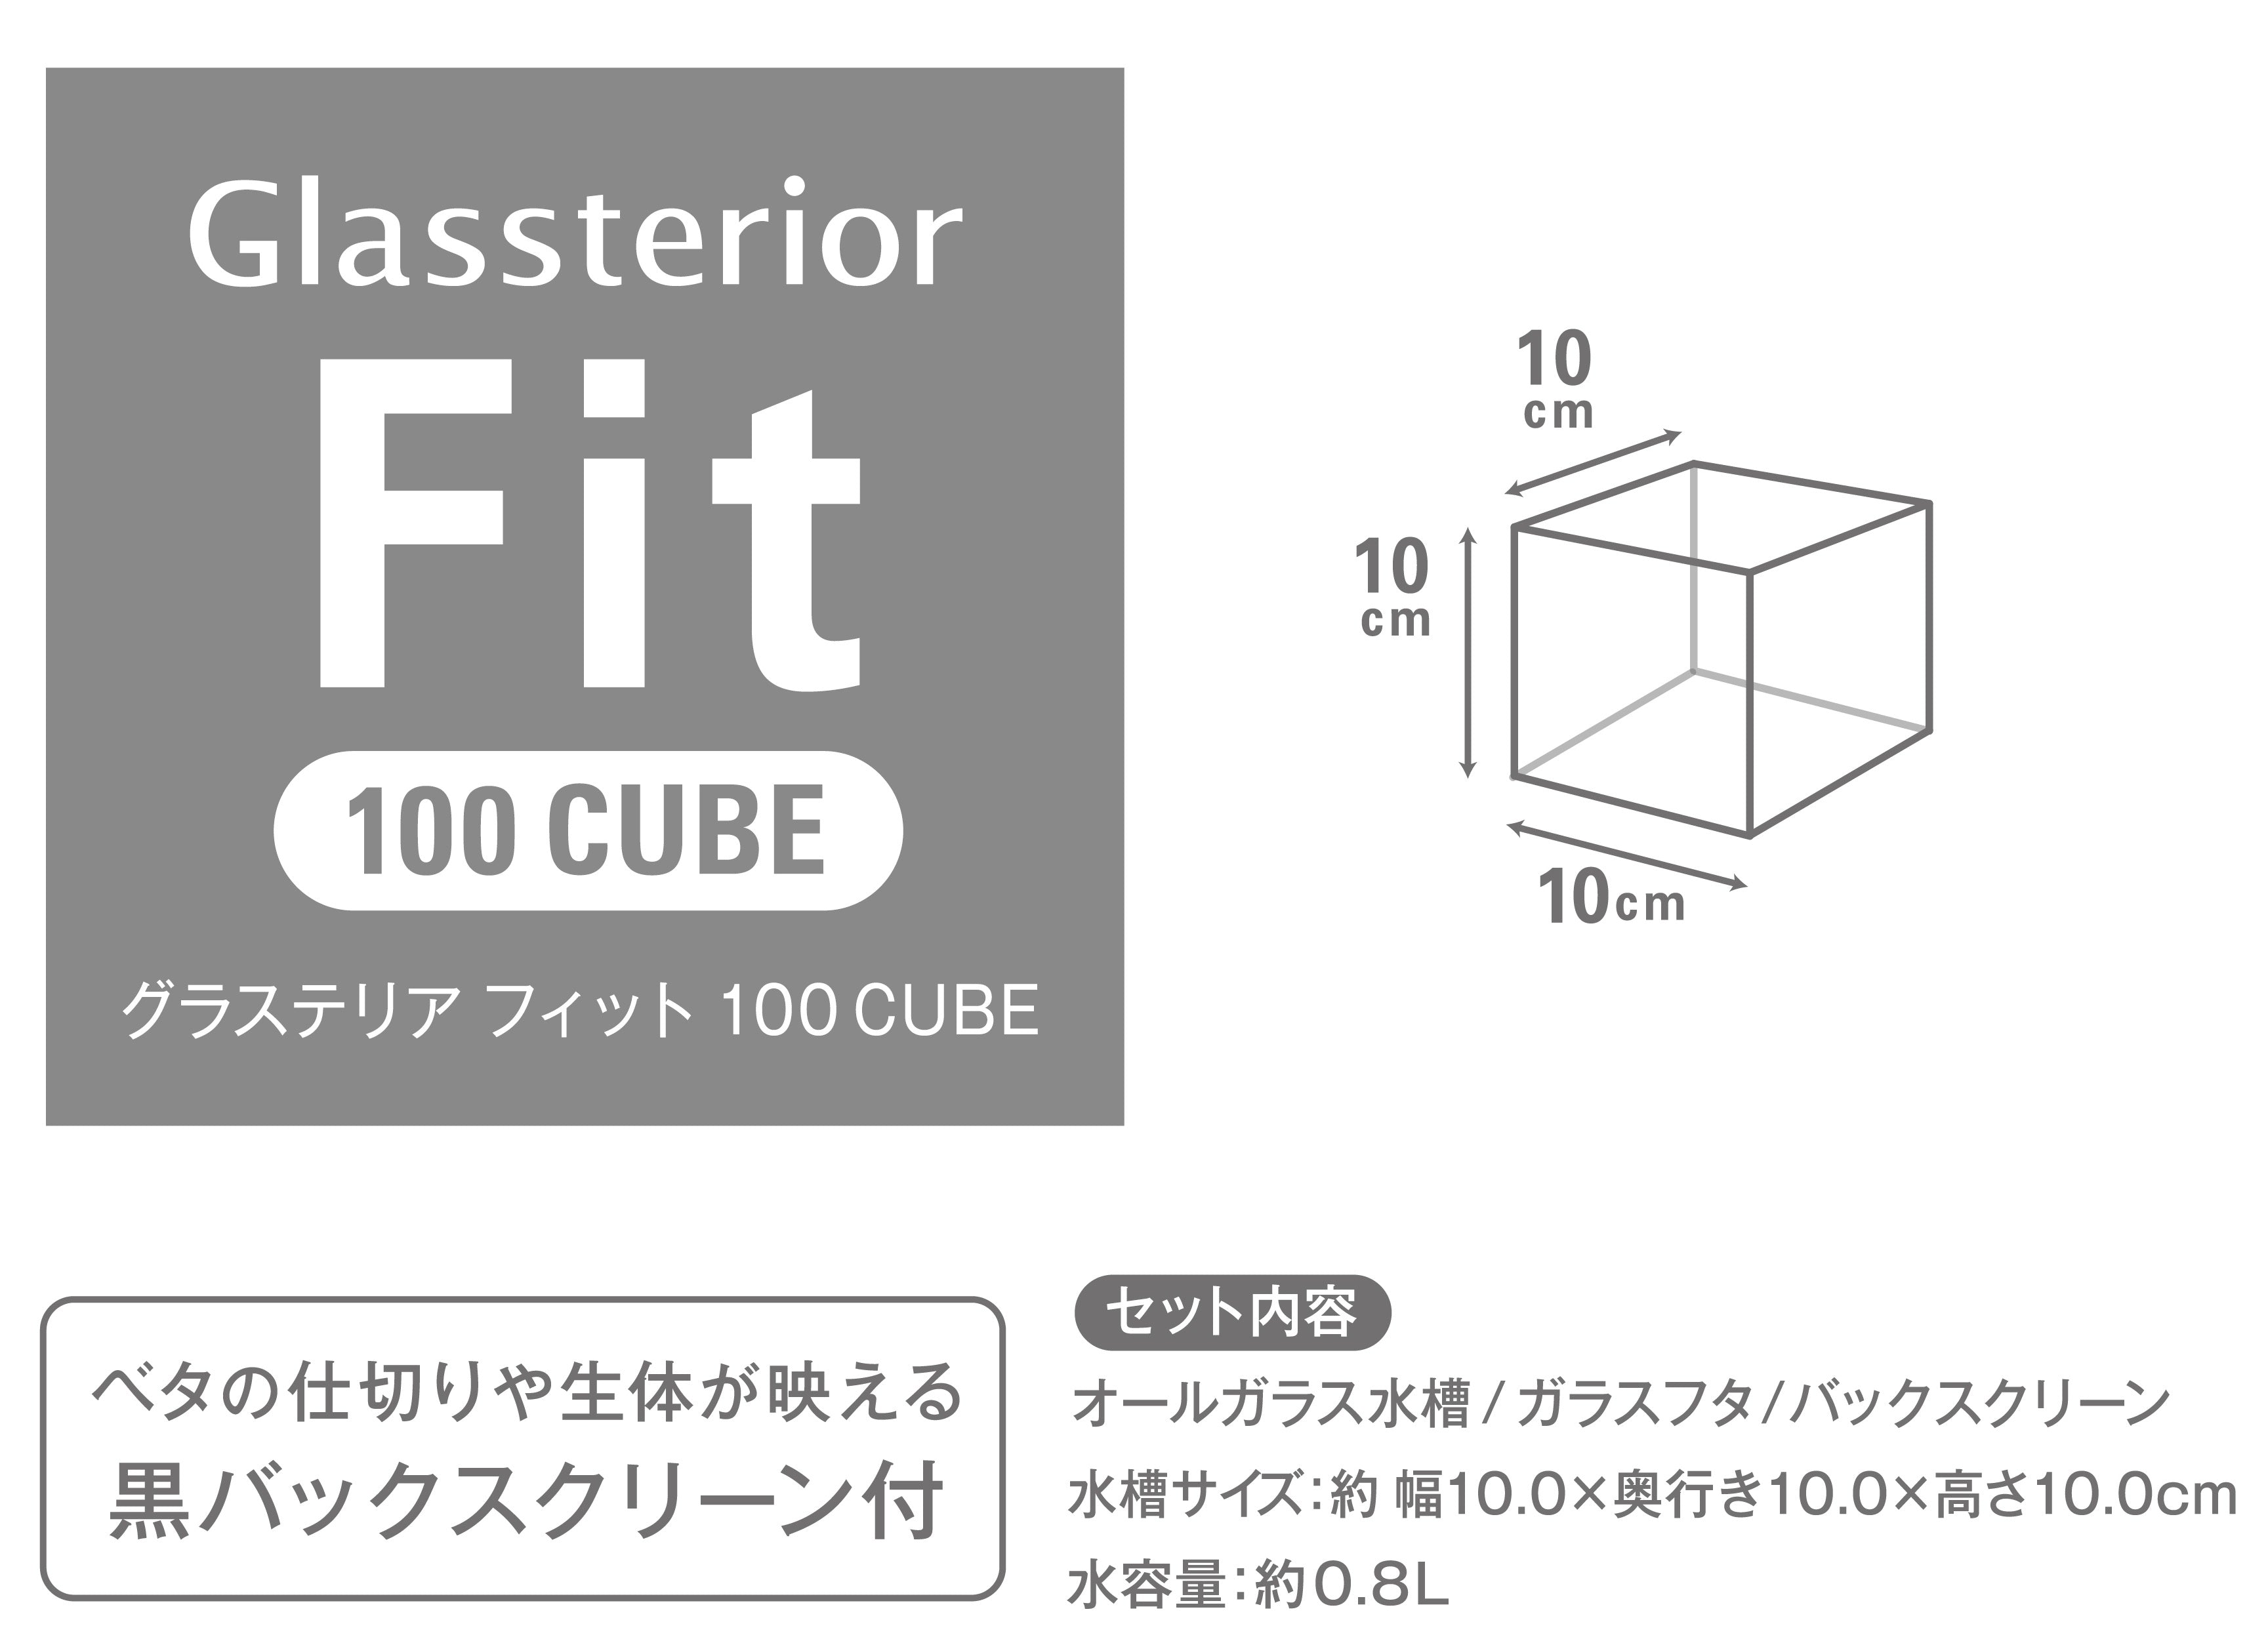 GEX Glassterior Fit 100 CUBE魚缸 (10X10X10cm) #8624